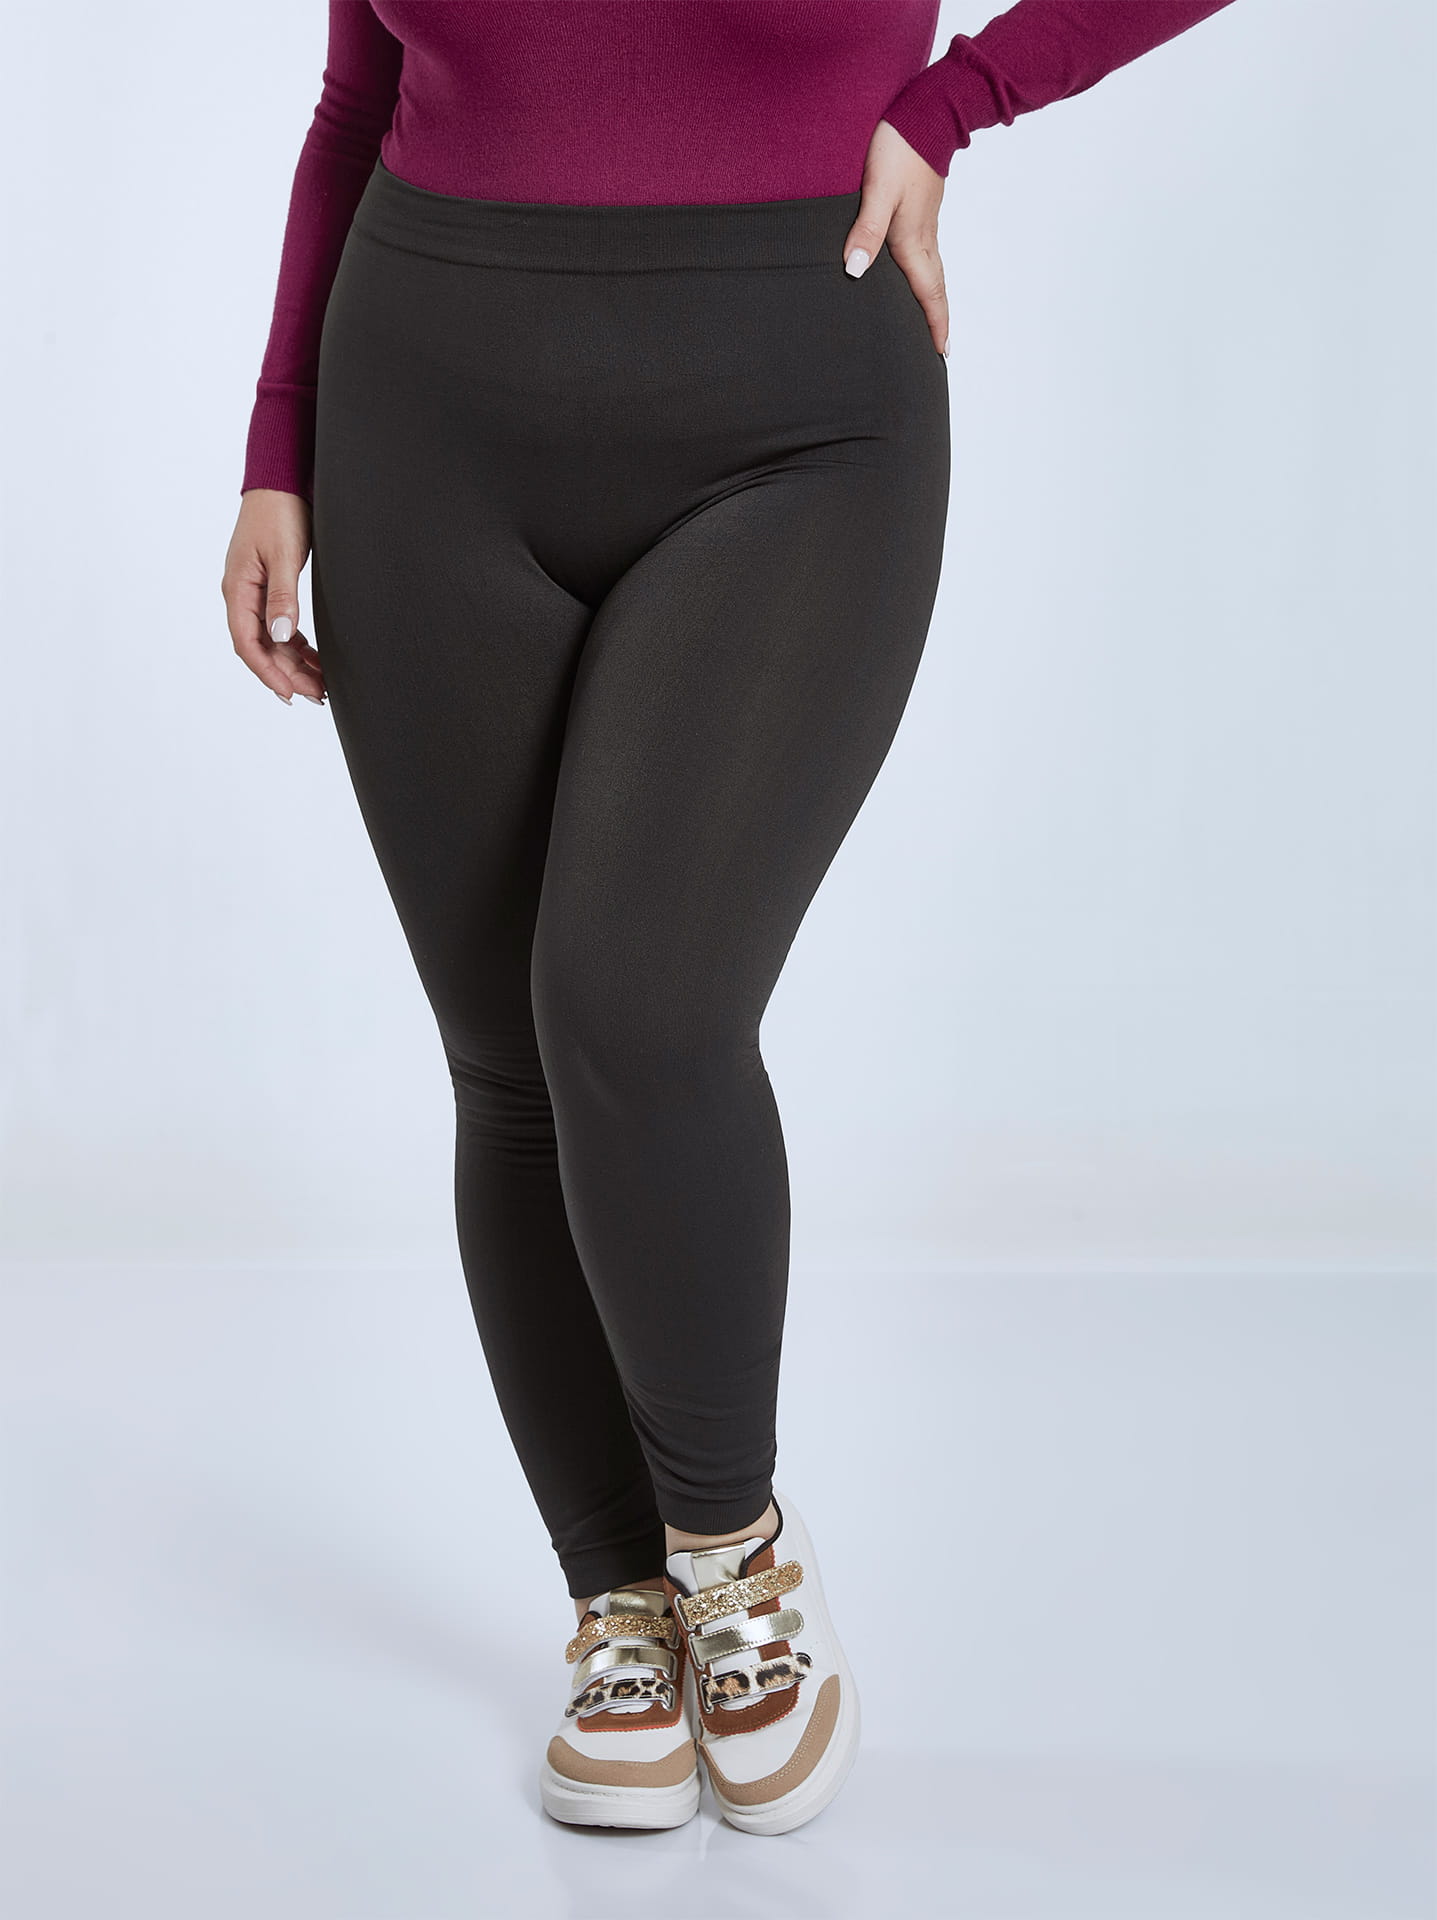 High waist thermal leggings in dark grey, 4.99€